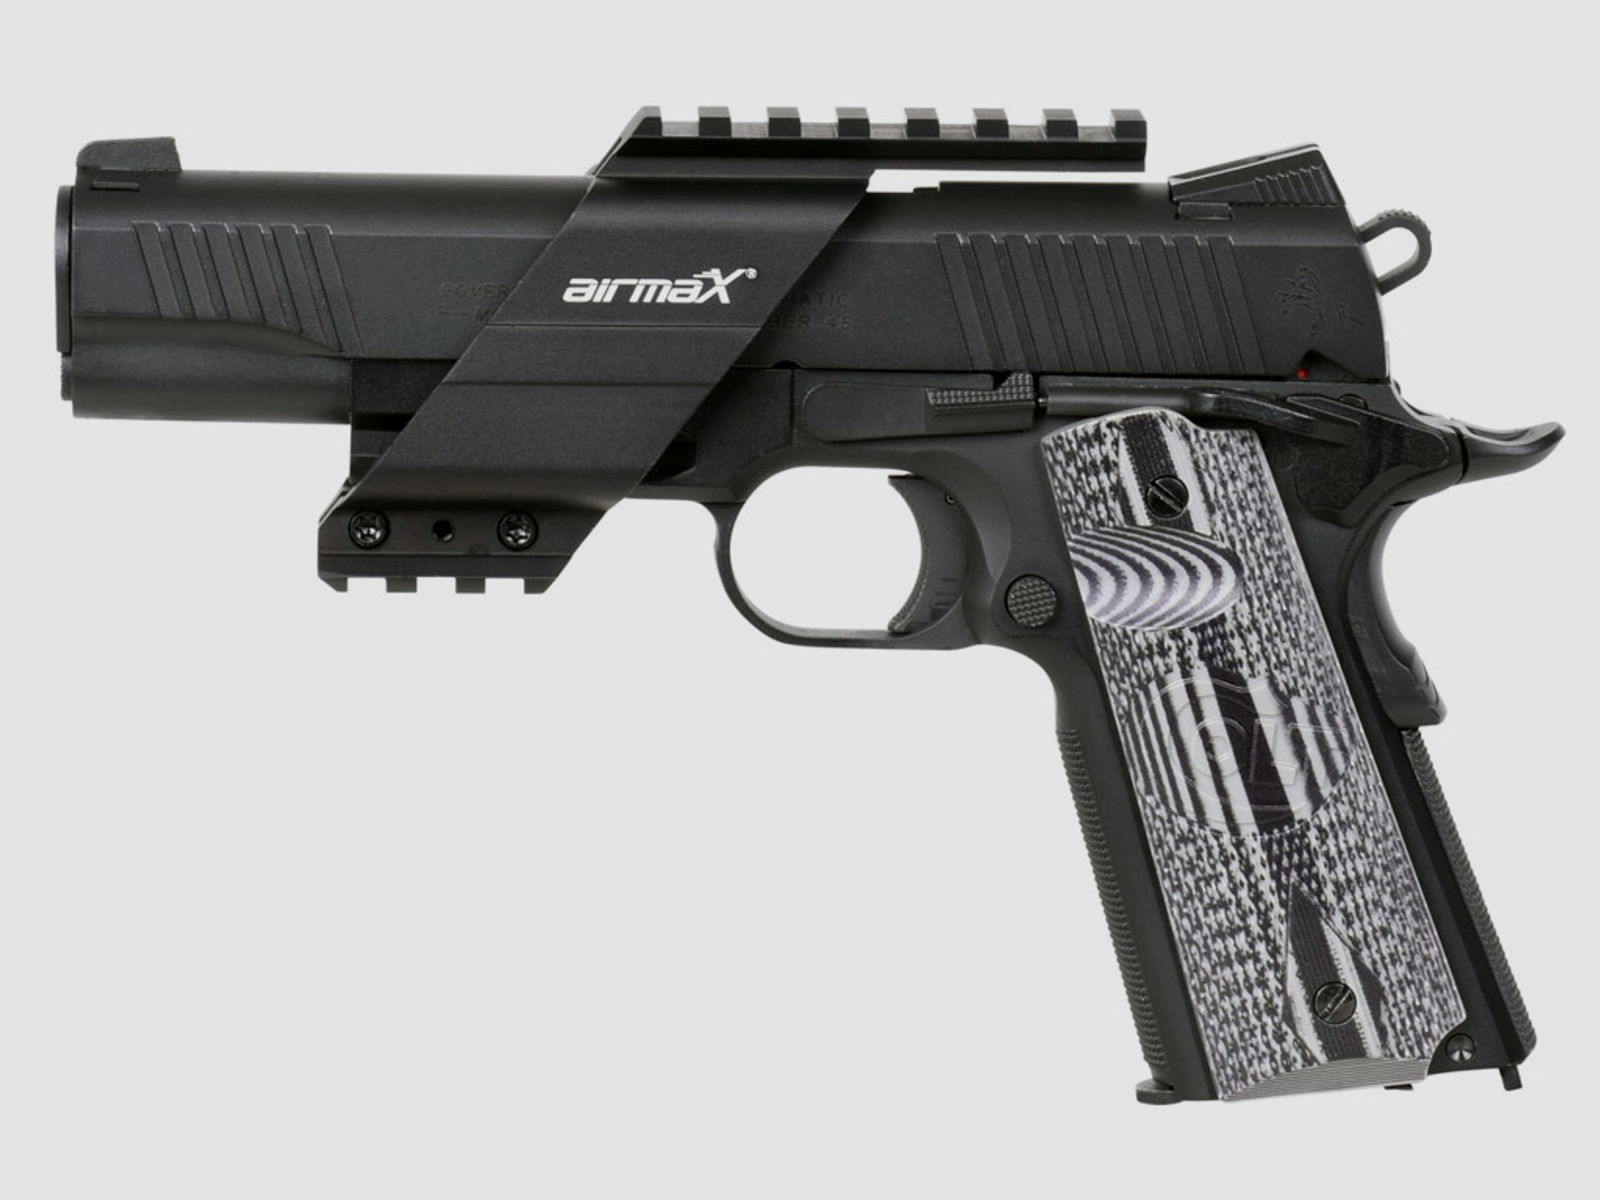 Pistolenmontage universal fĂĽr Pistolen mit 22 mm Unterlaufschiene Metall fĂĽr Optiken oder andere Anbauteile